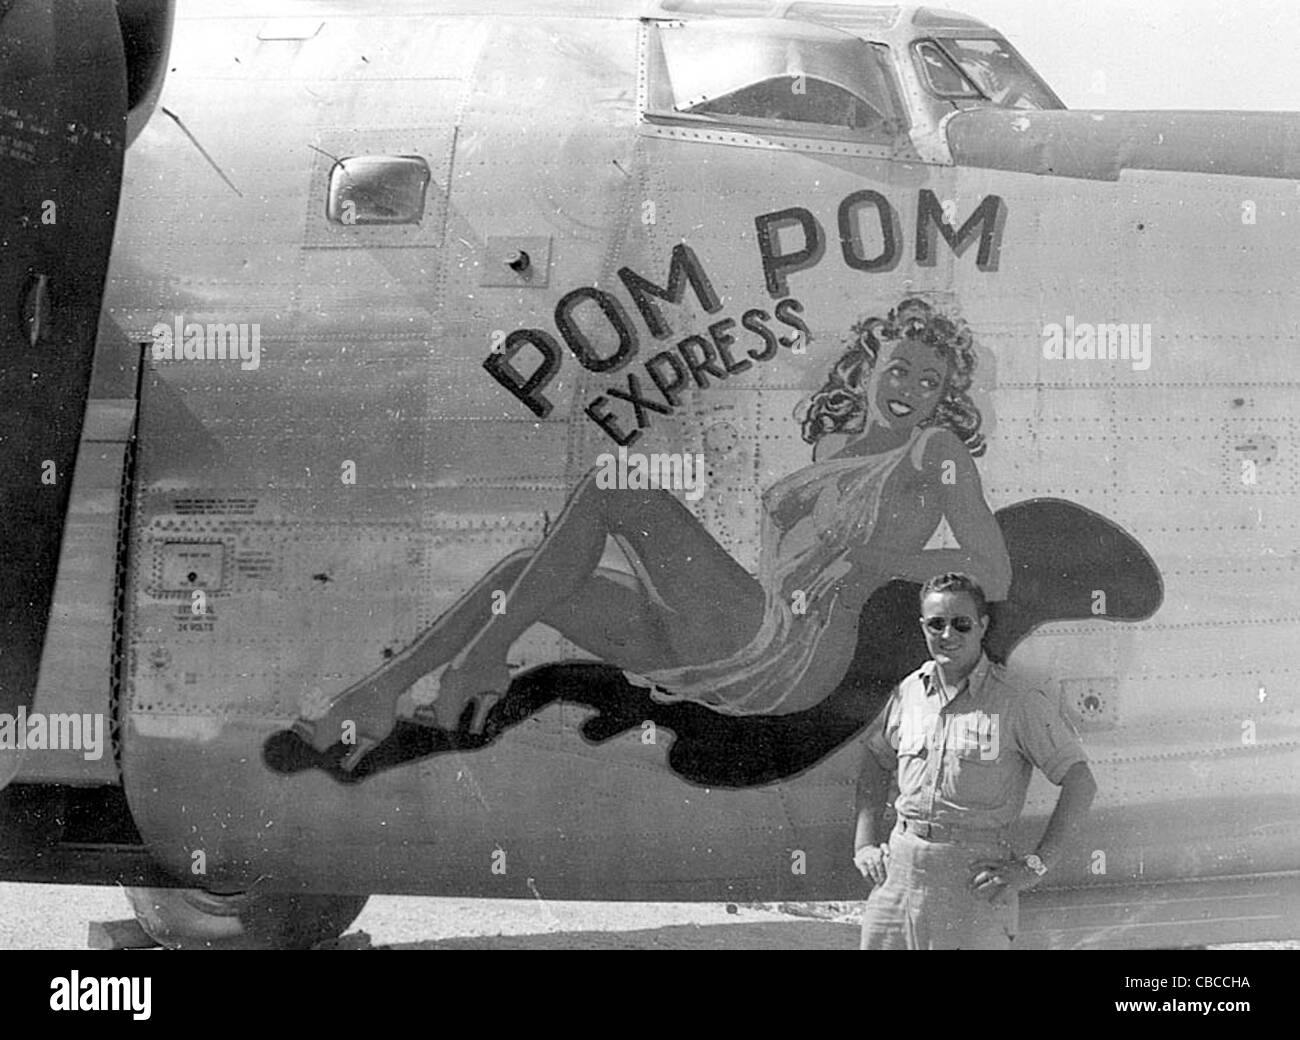 WW11 USAAF Liberatore naso arte pom pom Express Foto Stock